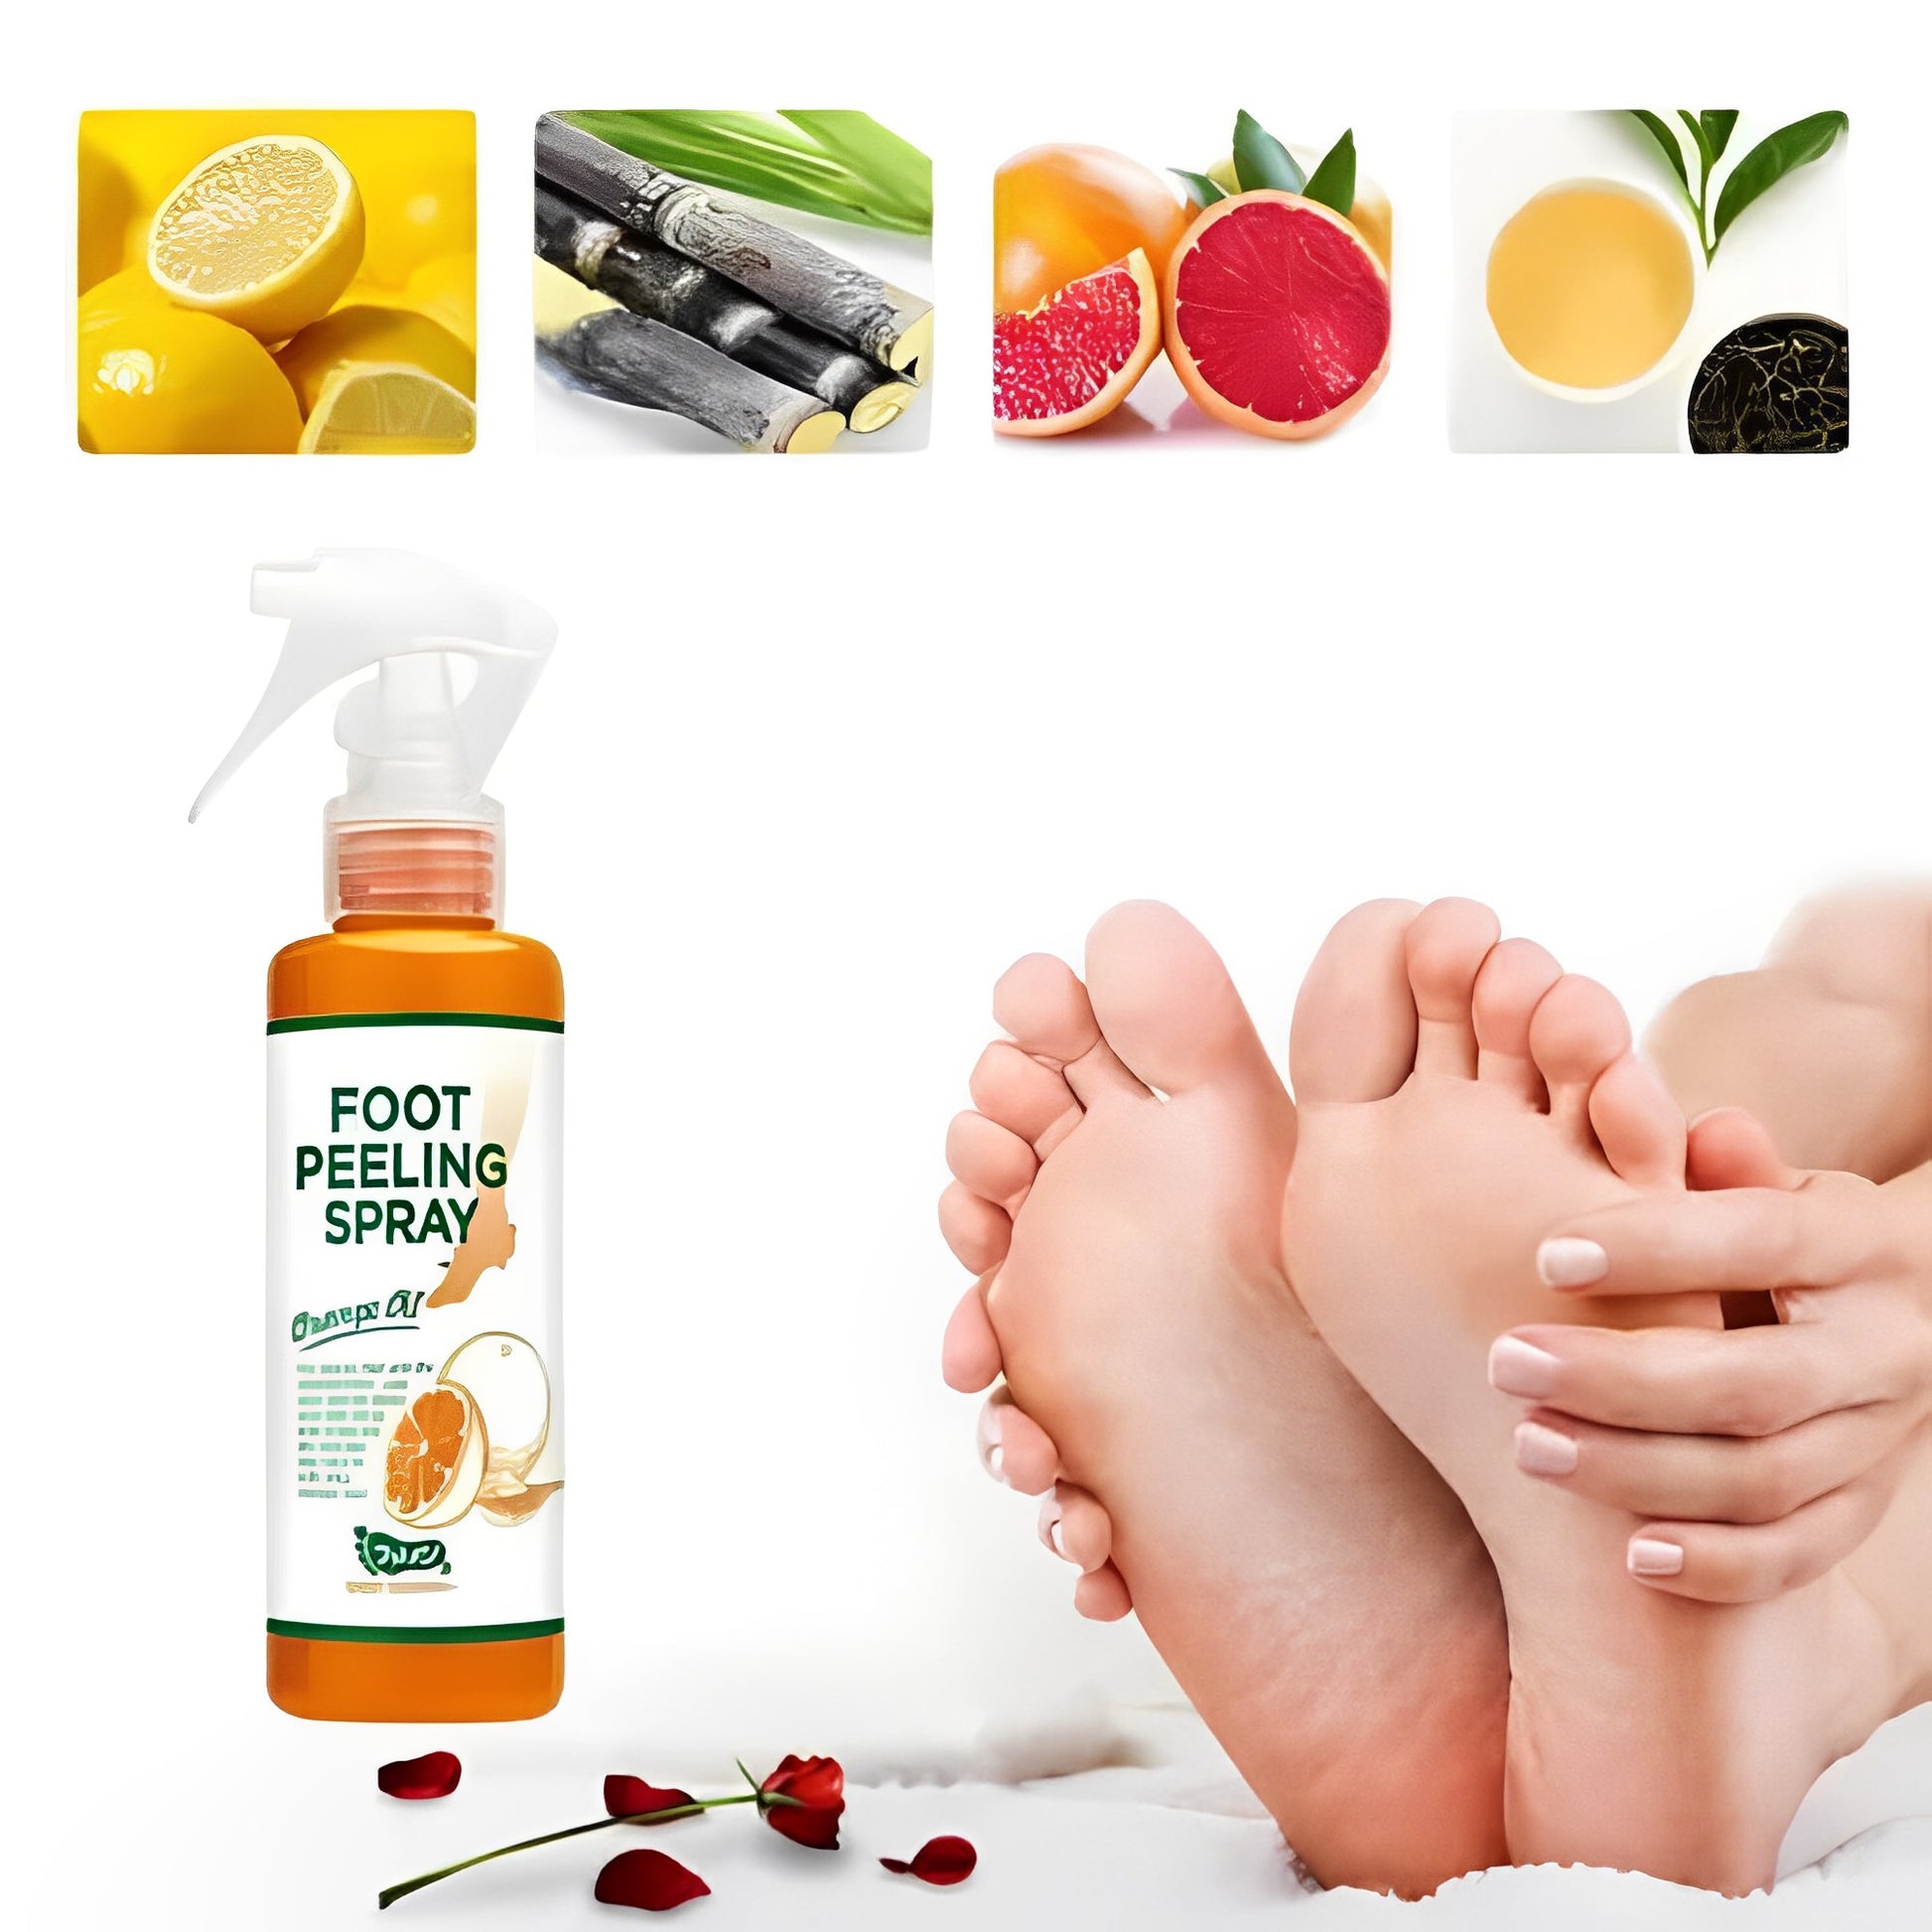 Foot Peeling Spray Natural Orange Oil Benefits